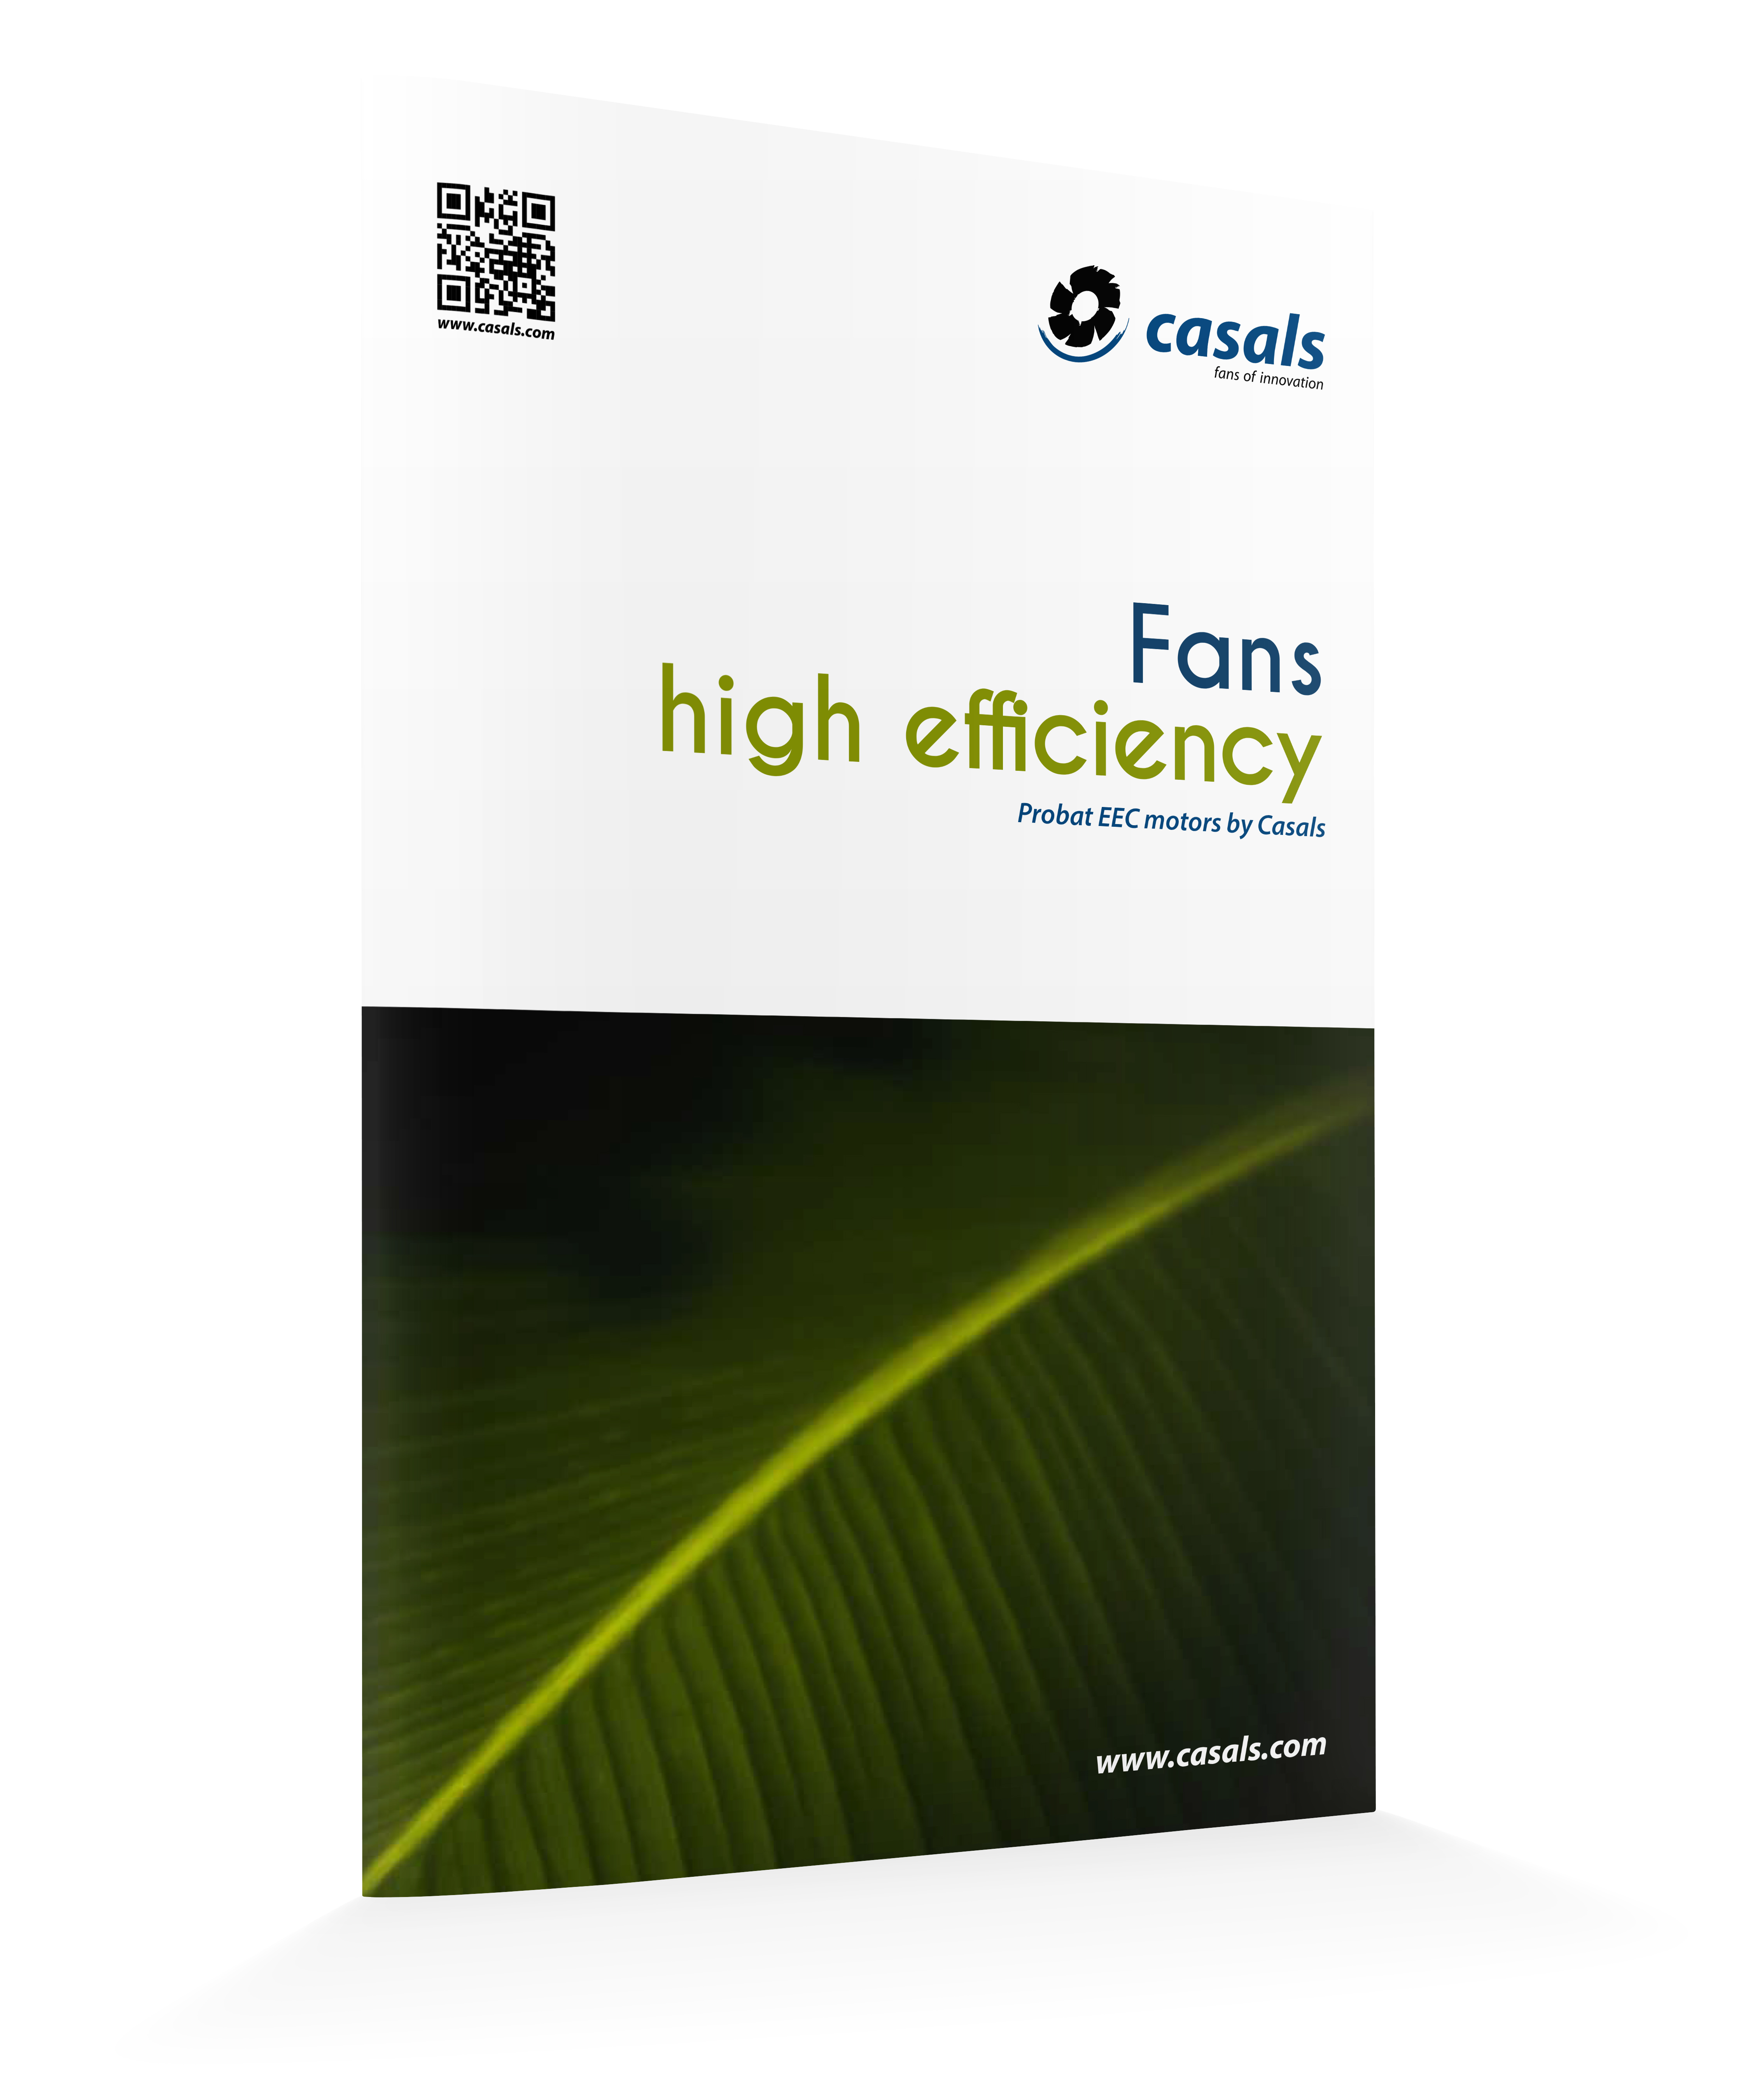 High efficiency fans with EEC motor